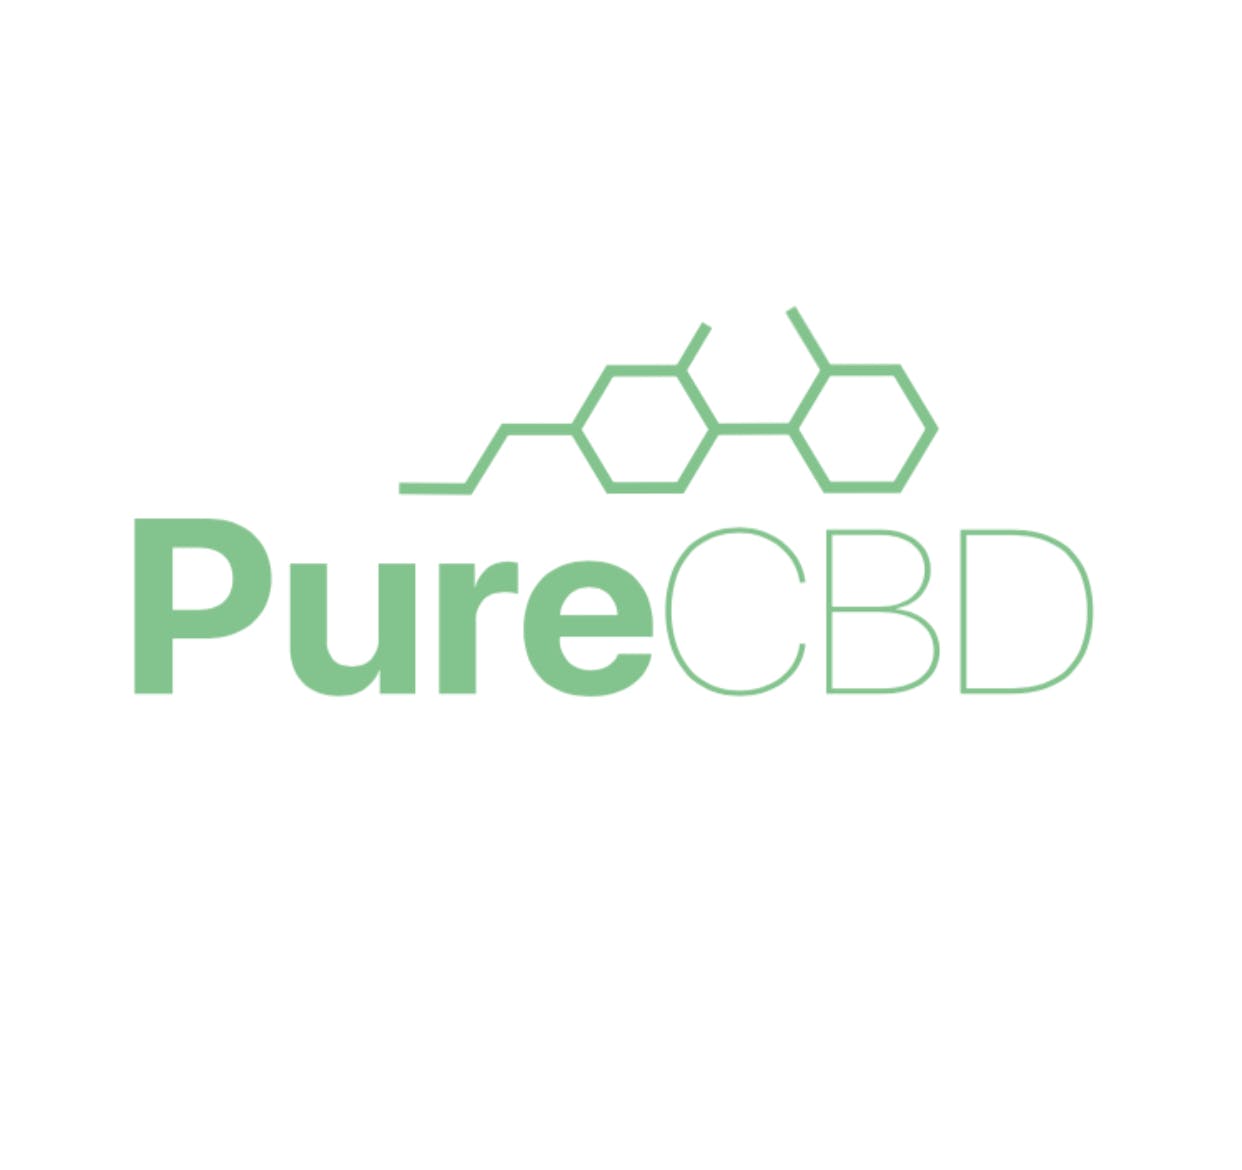 PURE CBD - CBD ONLY - Medical Marijuana Doctors - Cannabizme.com